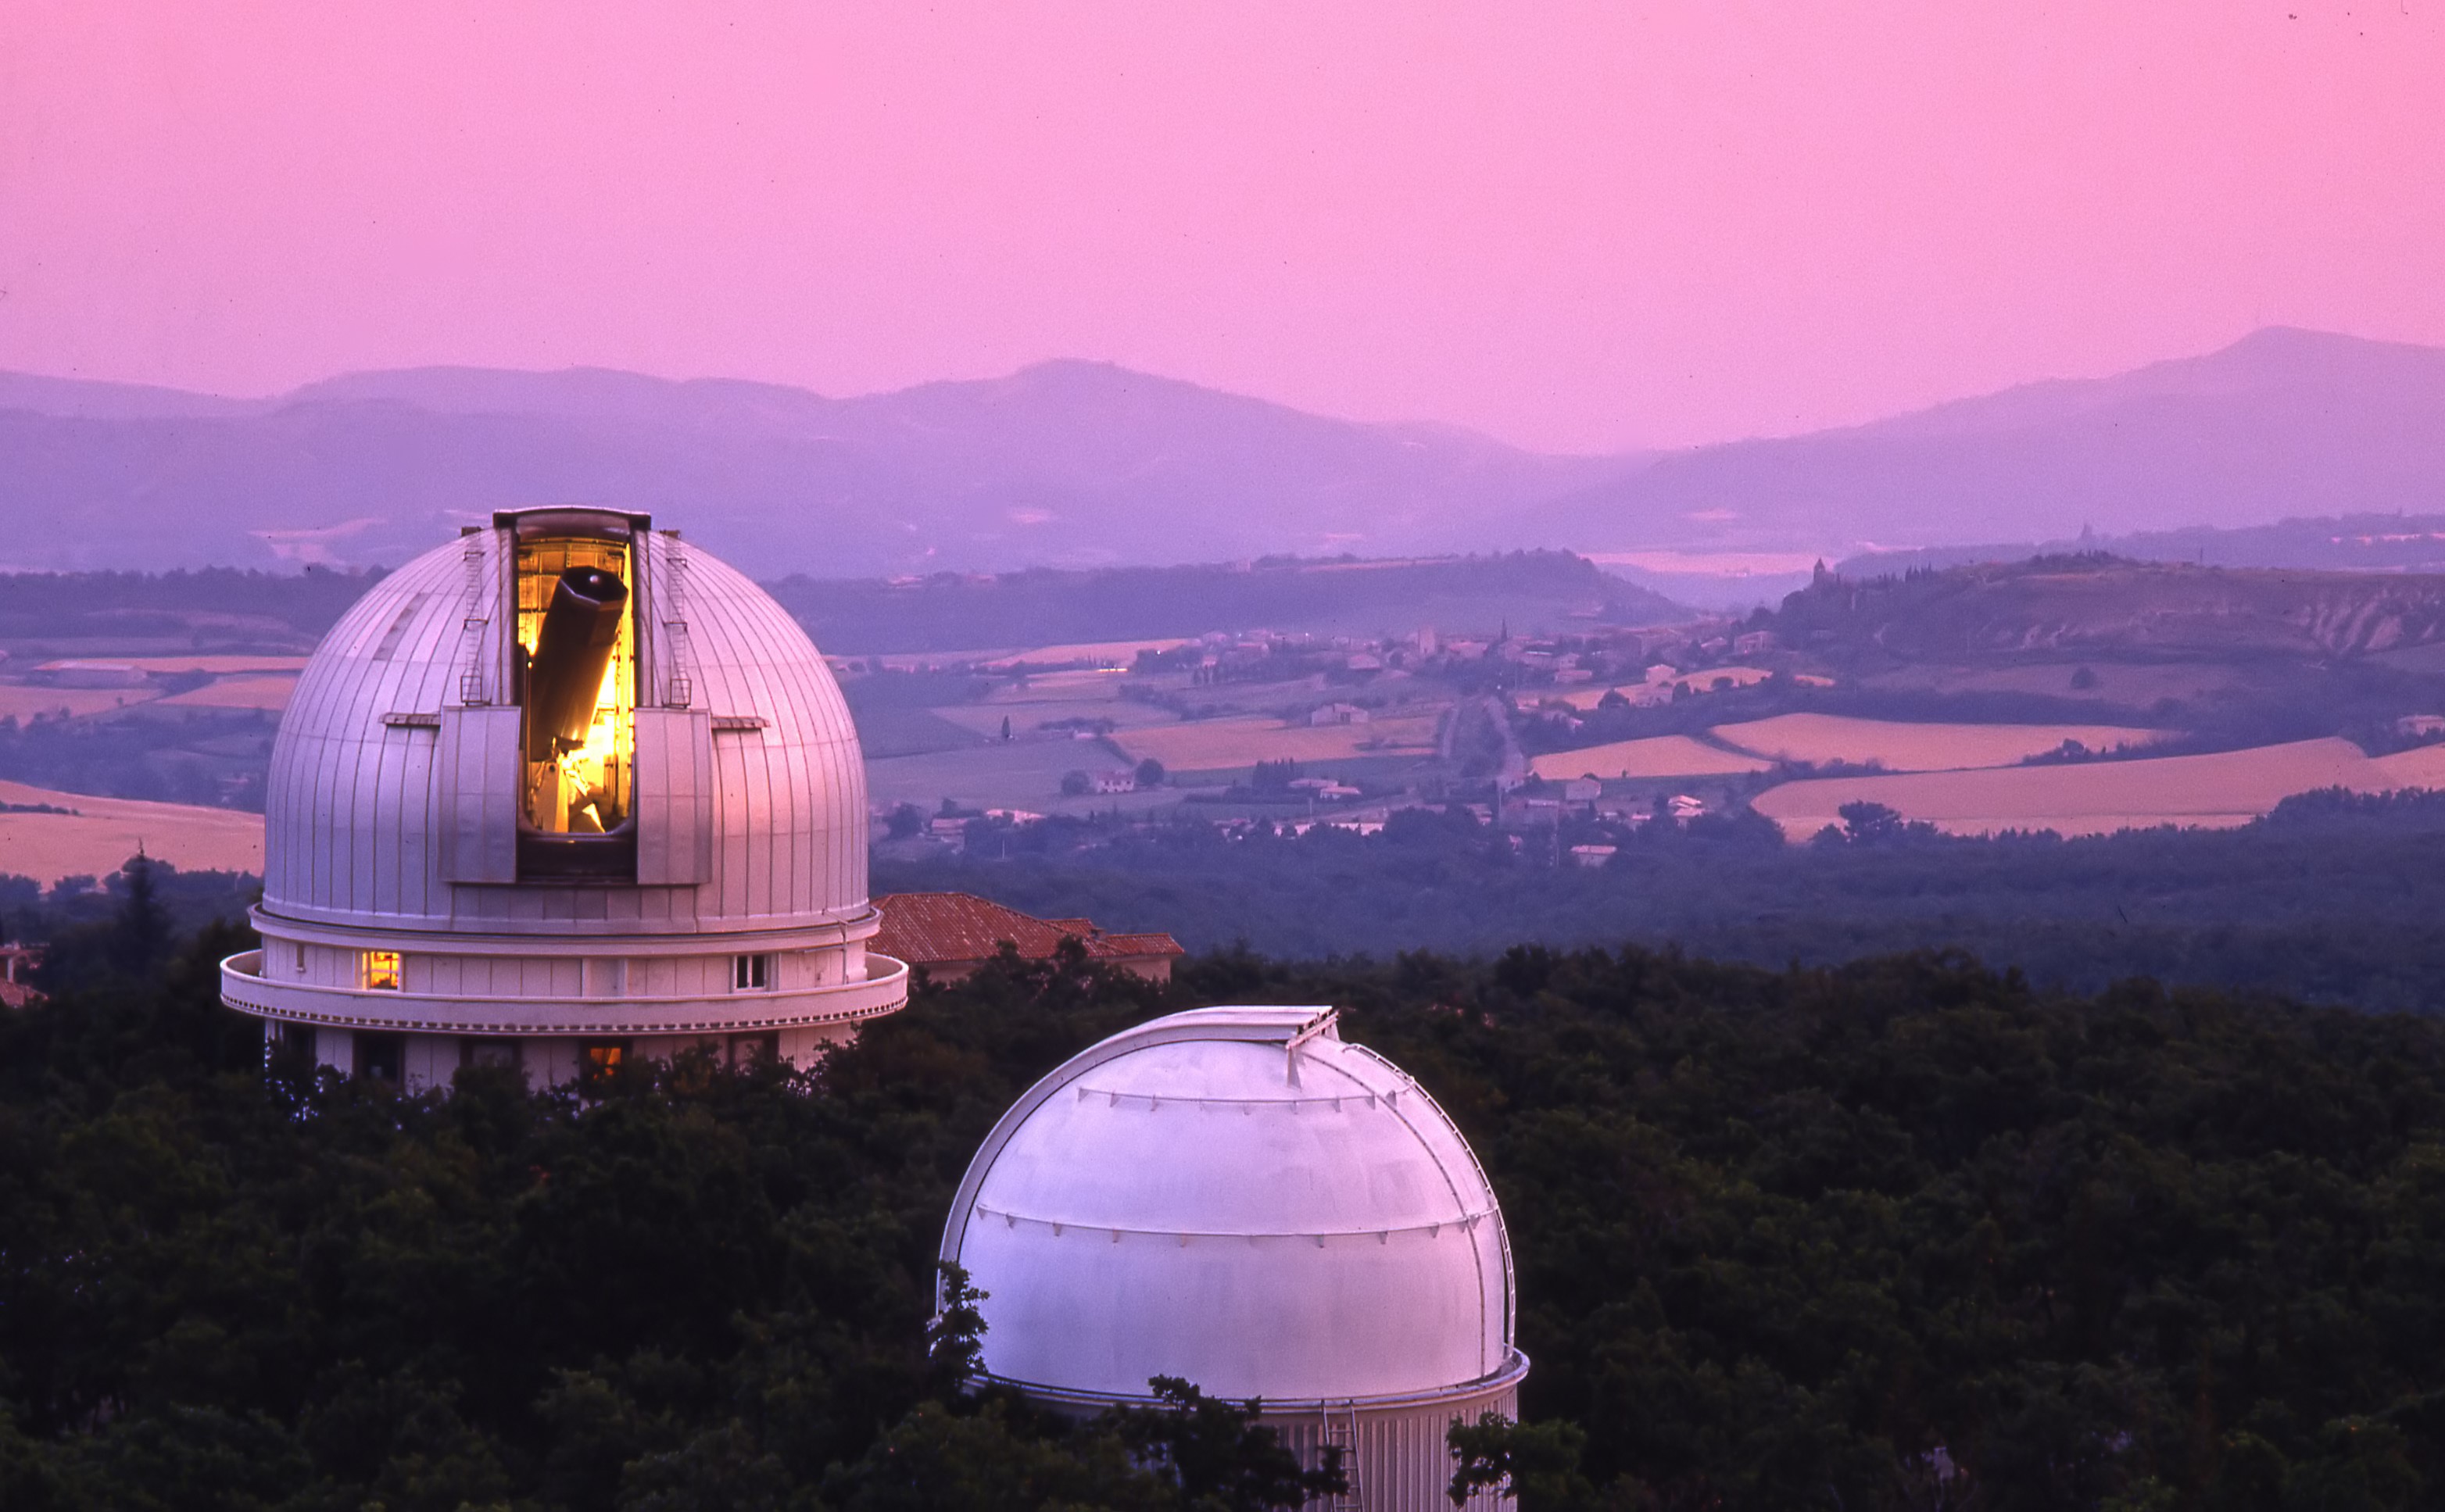 Observatoire de Haute-Provence in France